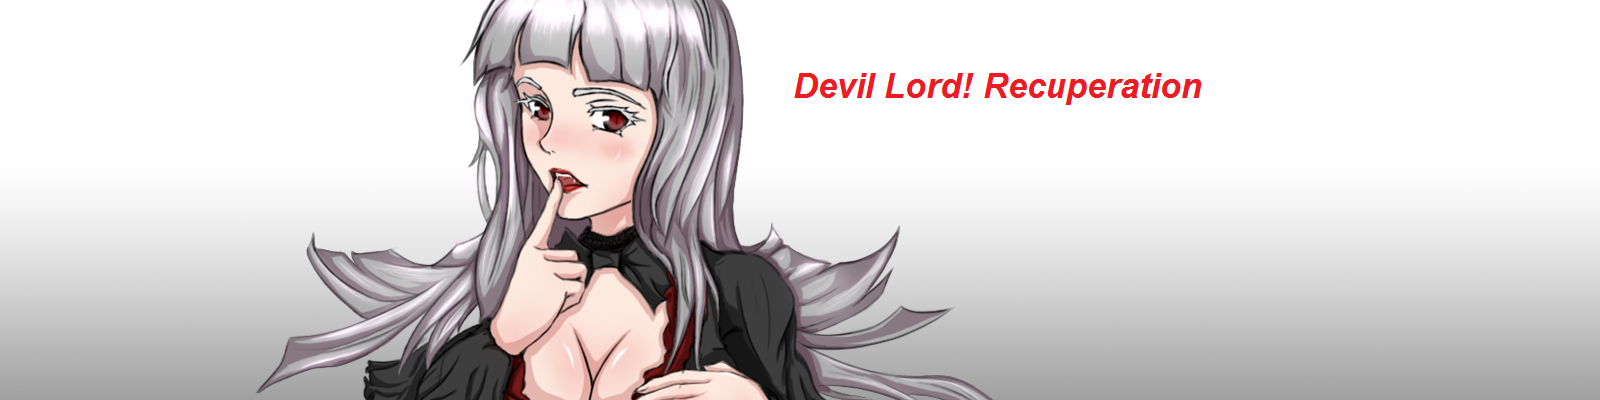 best of Lord recuperation girls demo devil monster